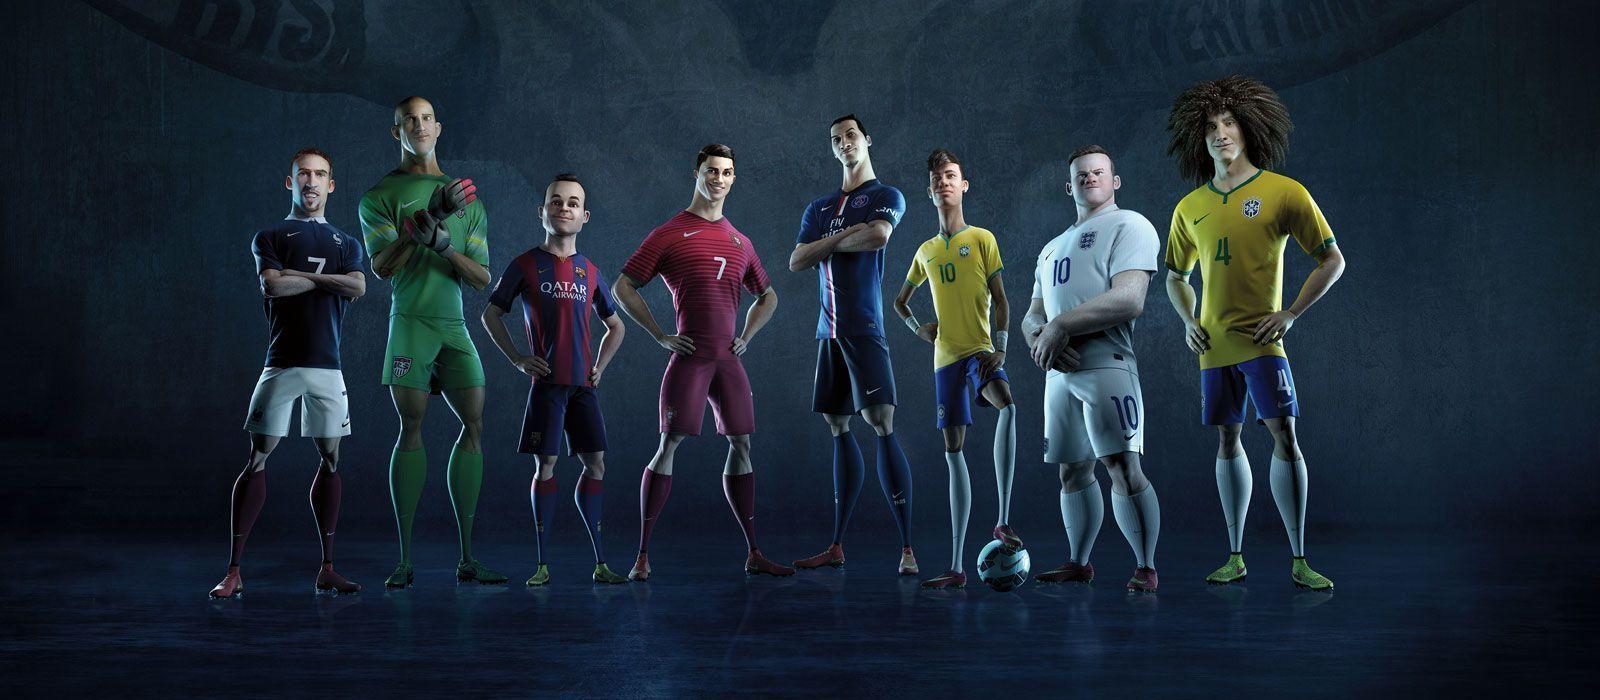 New Football Nike World Cup 2014 Wallpaper HD for Desktop